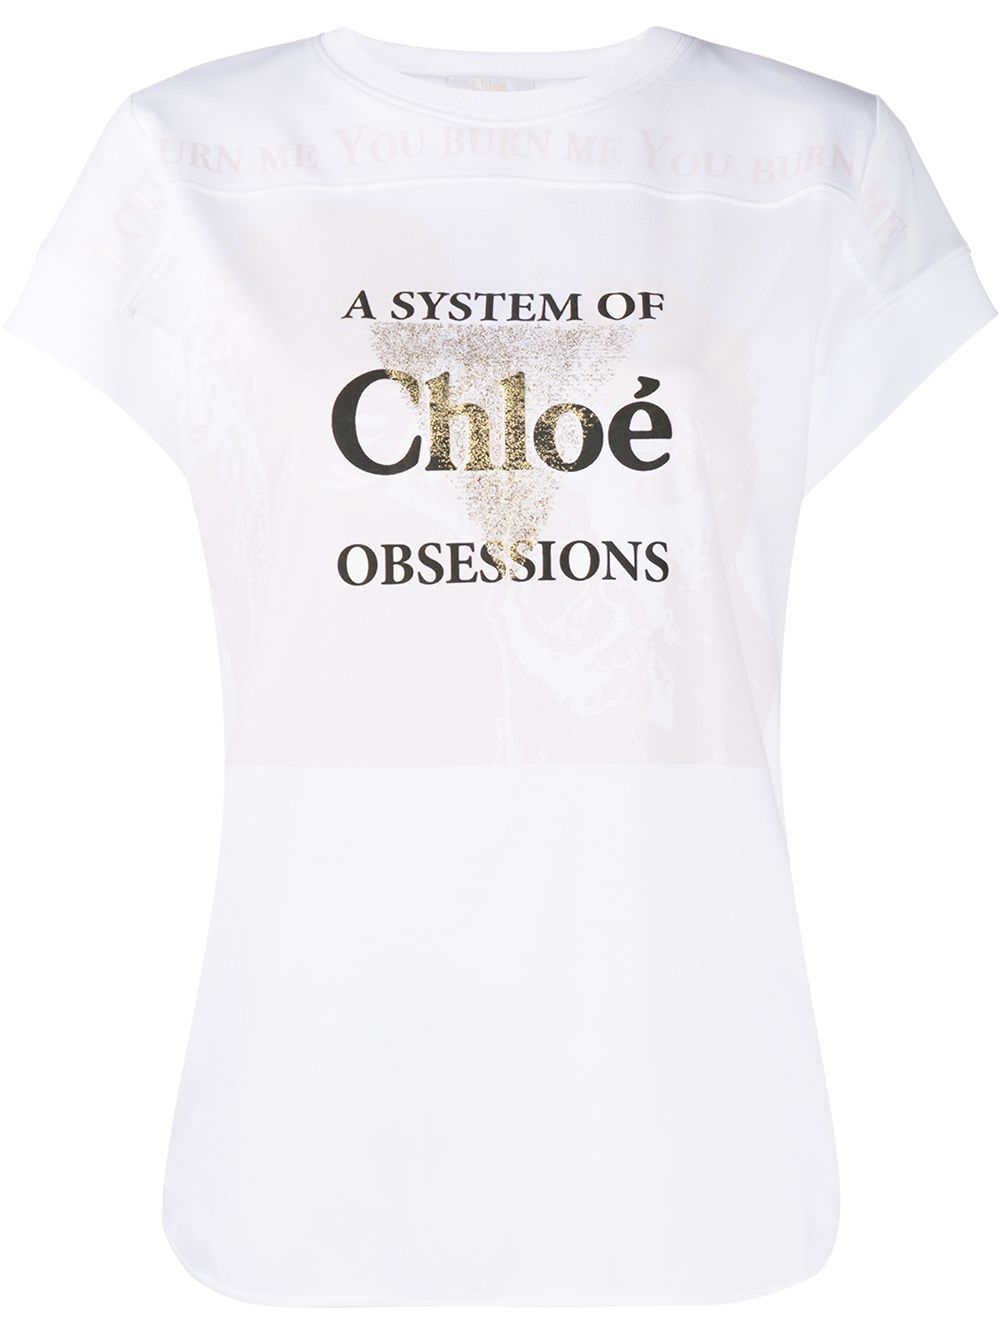 фото Chloé футболка с надписью